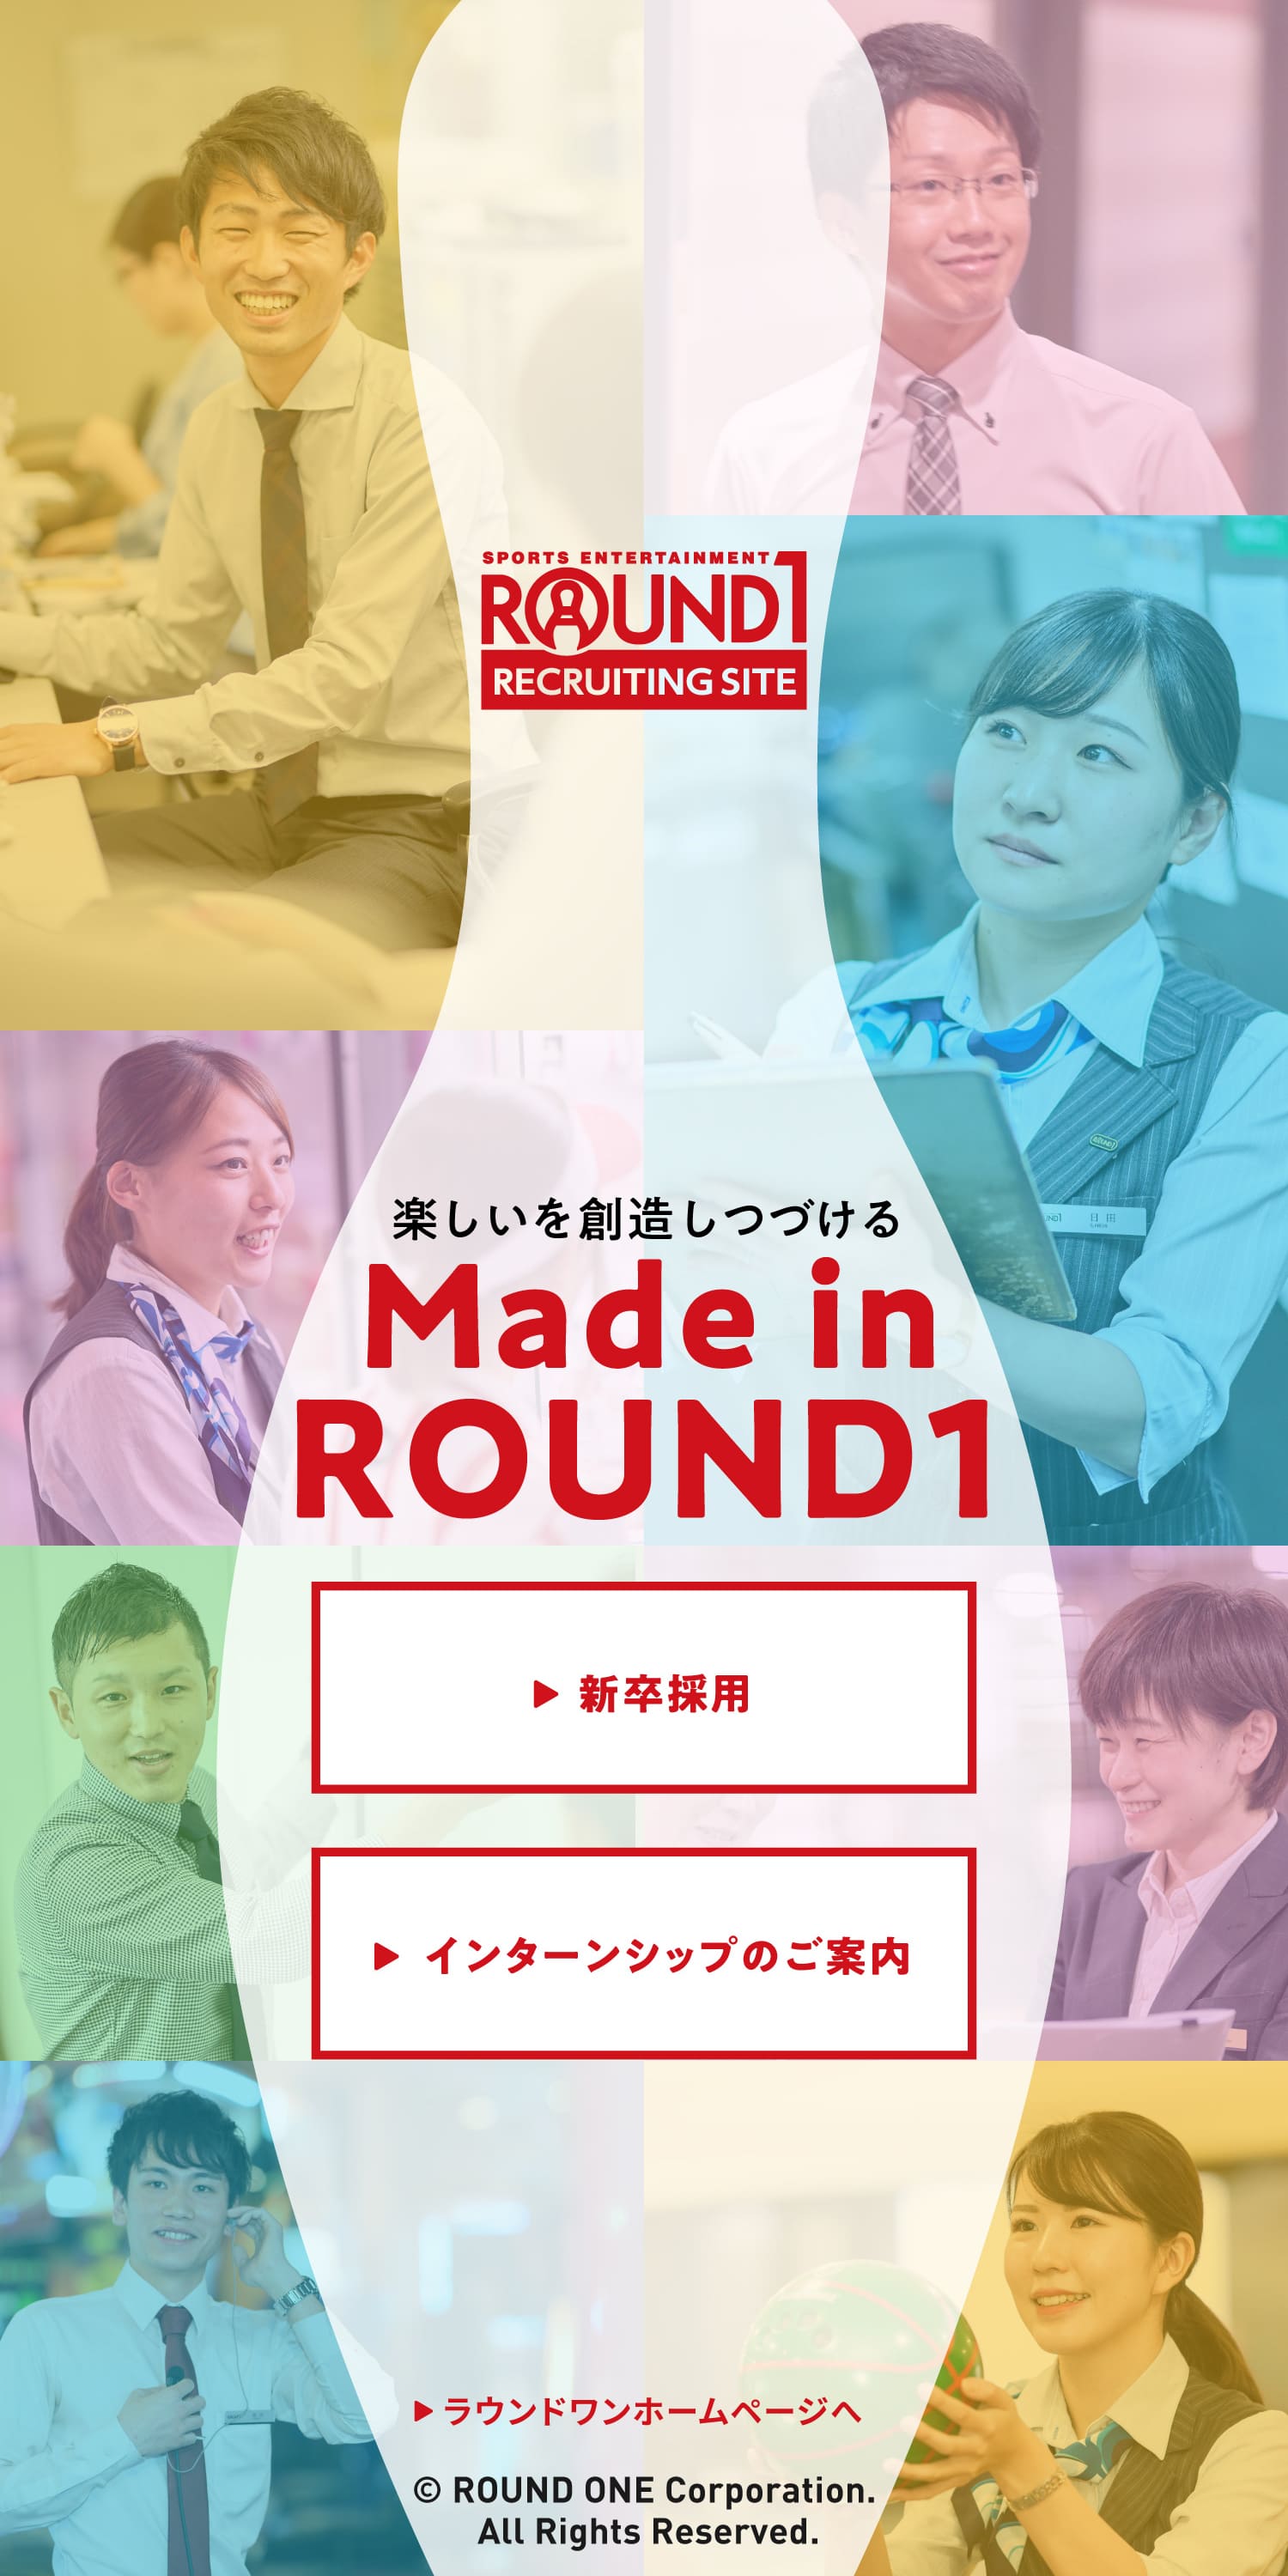 ROUND1 RECRUIT 2021 楽しいを創造し続けるMade in ROUND1